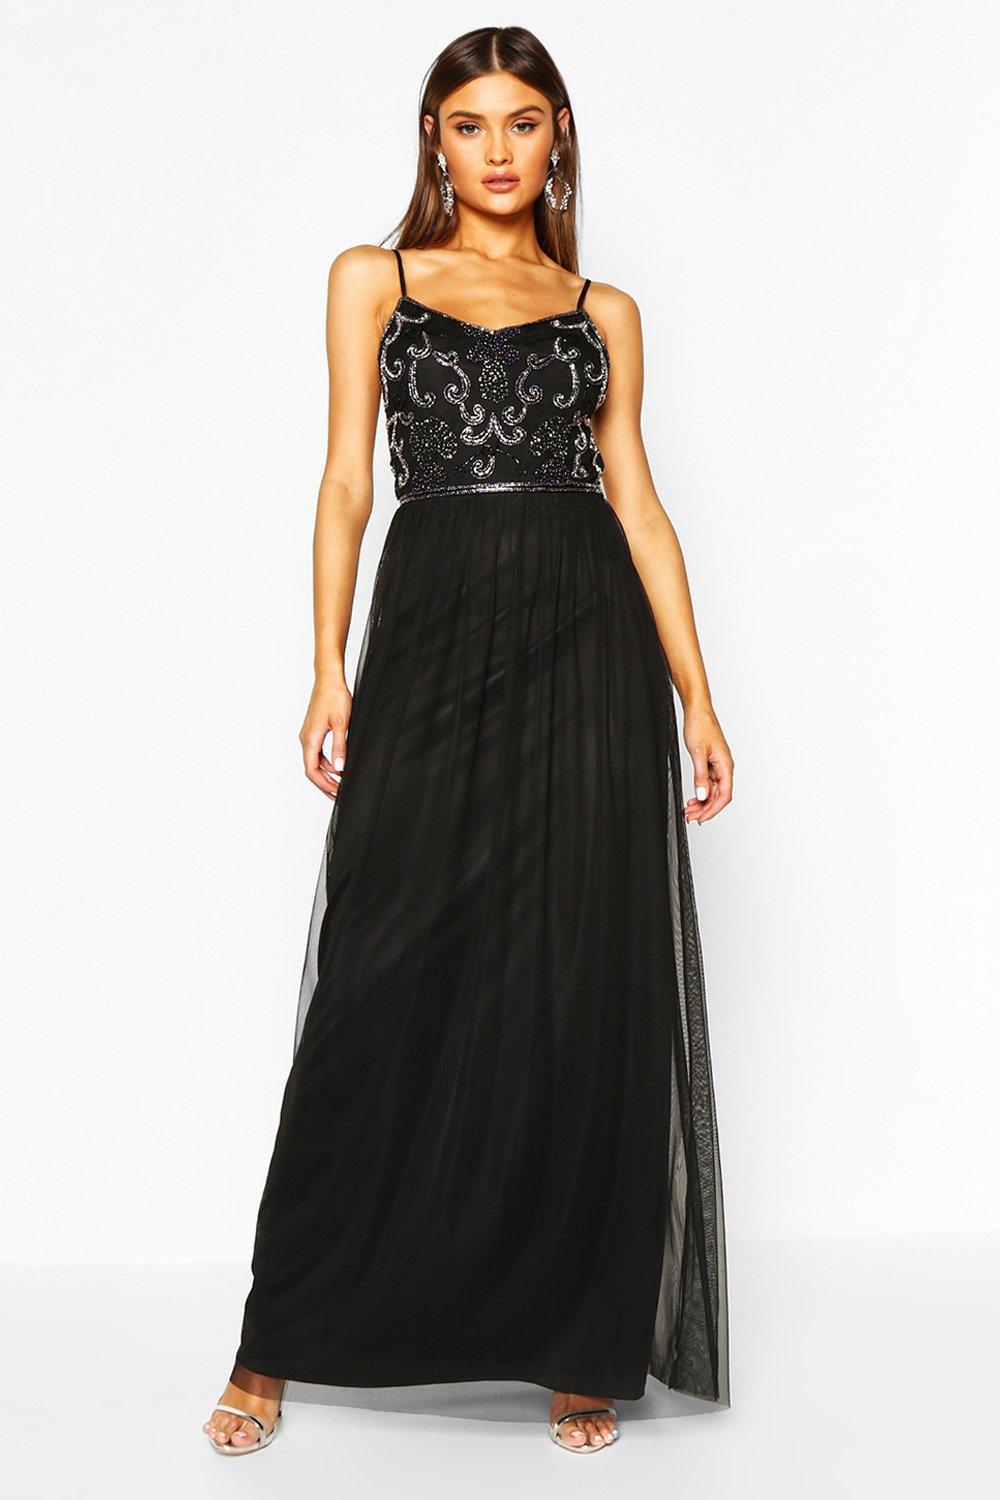 Boohoo Womens Lisa Boutique Embellished Prom Maxi Dress | eBay